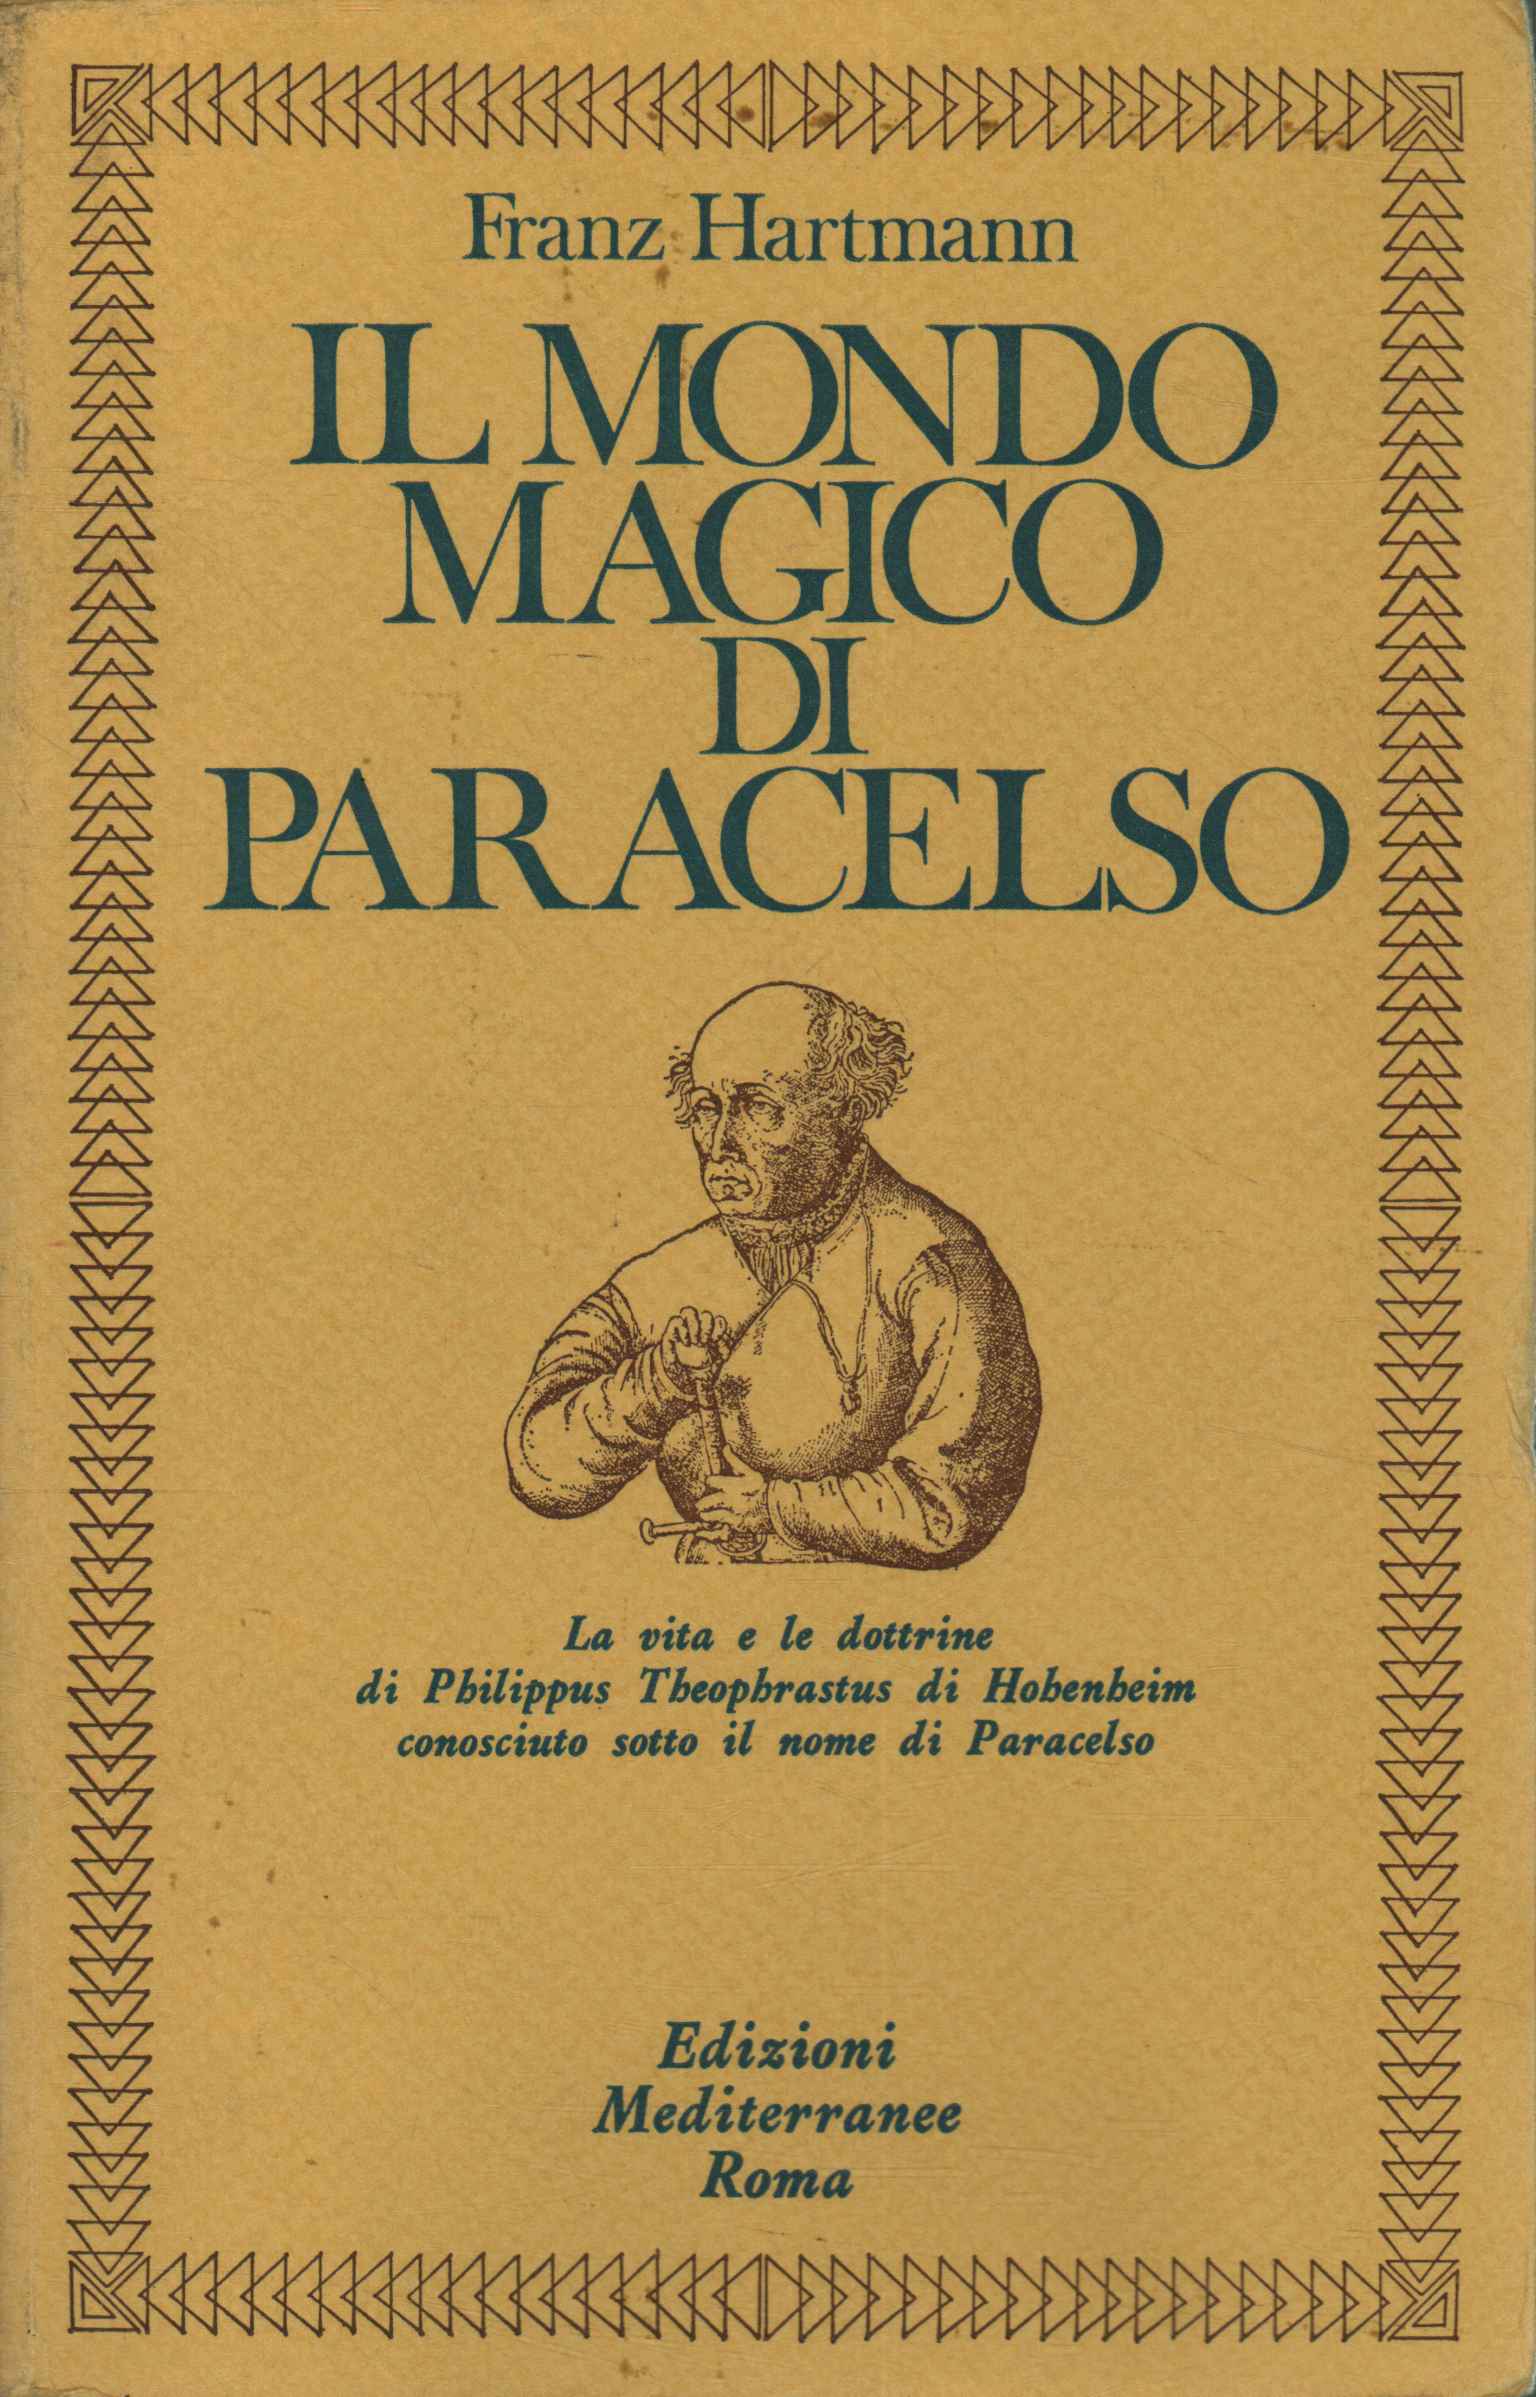 Die magische Welt des Paracelsus